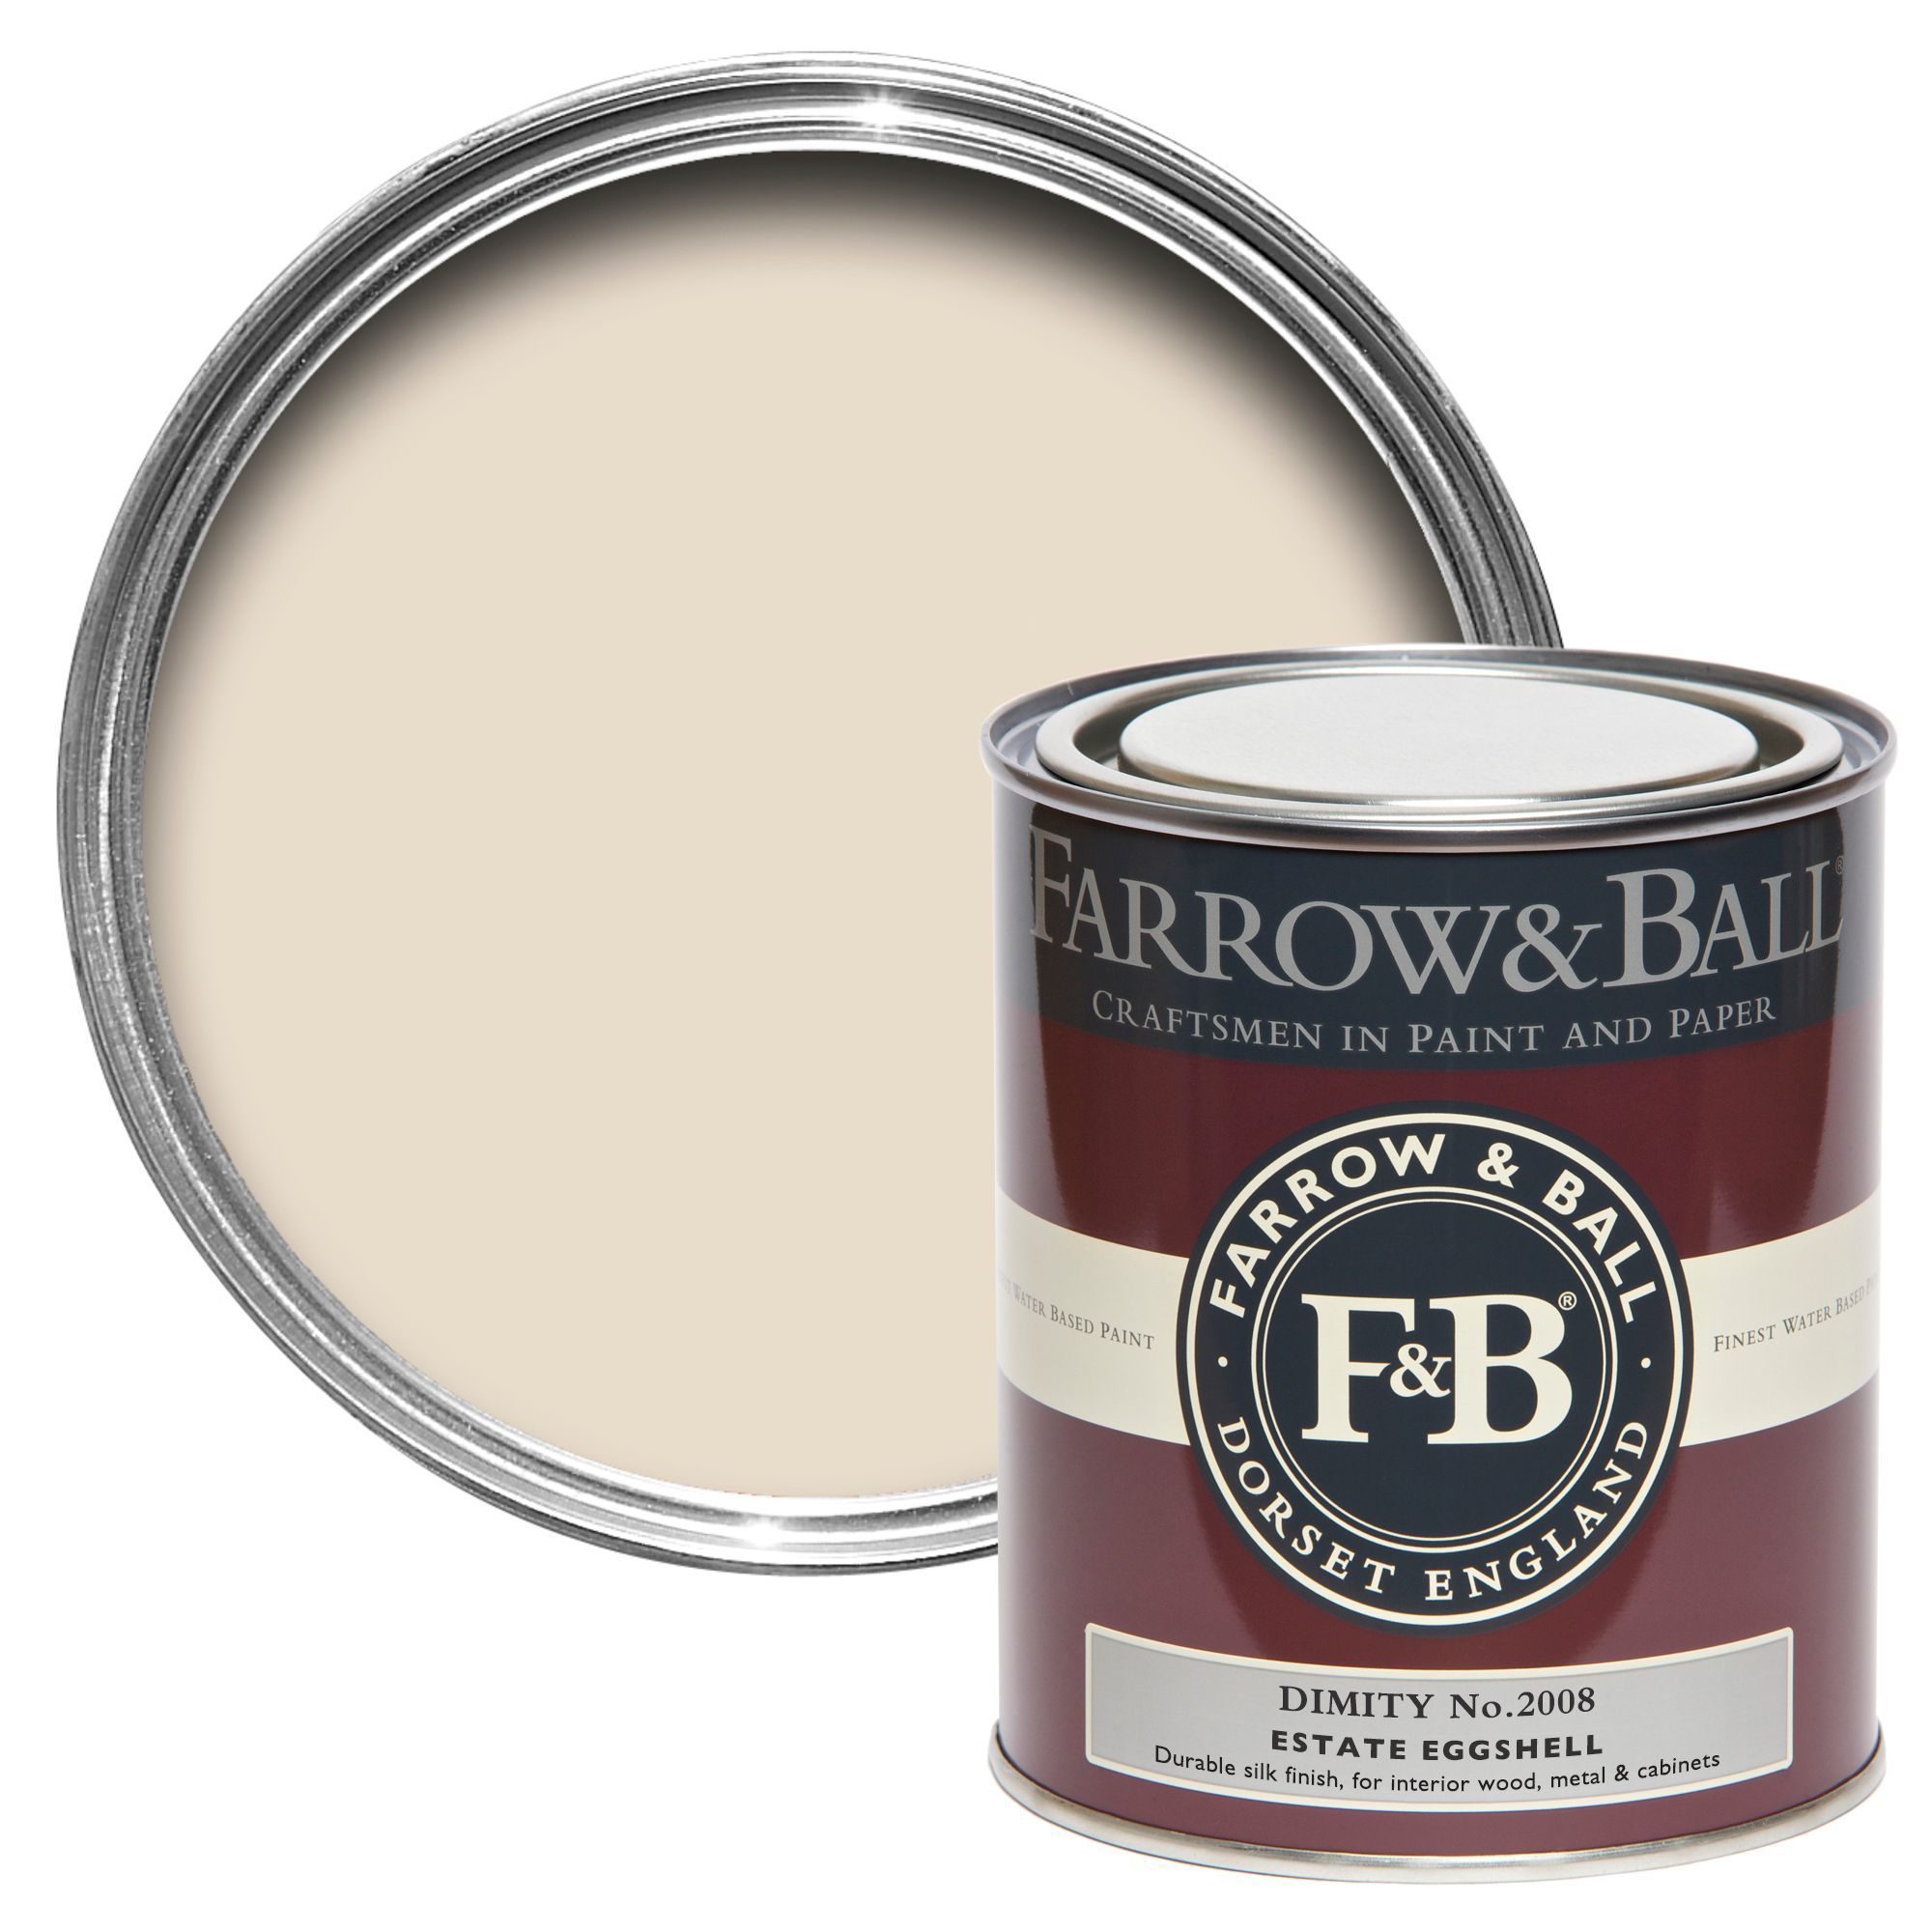 Farrow & Ball Estate Dimity No.2008 Eggshell Metal & wood paint, 750ml